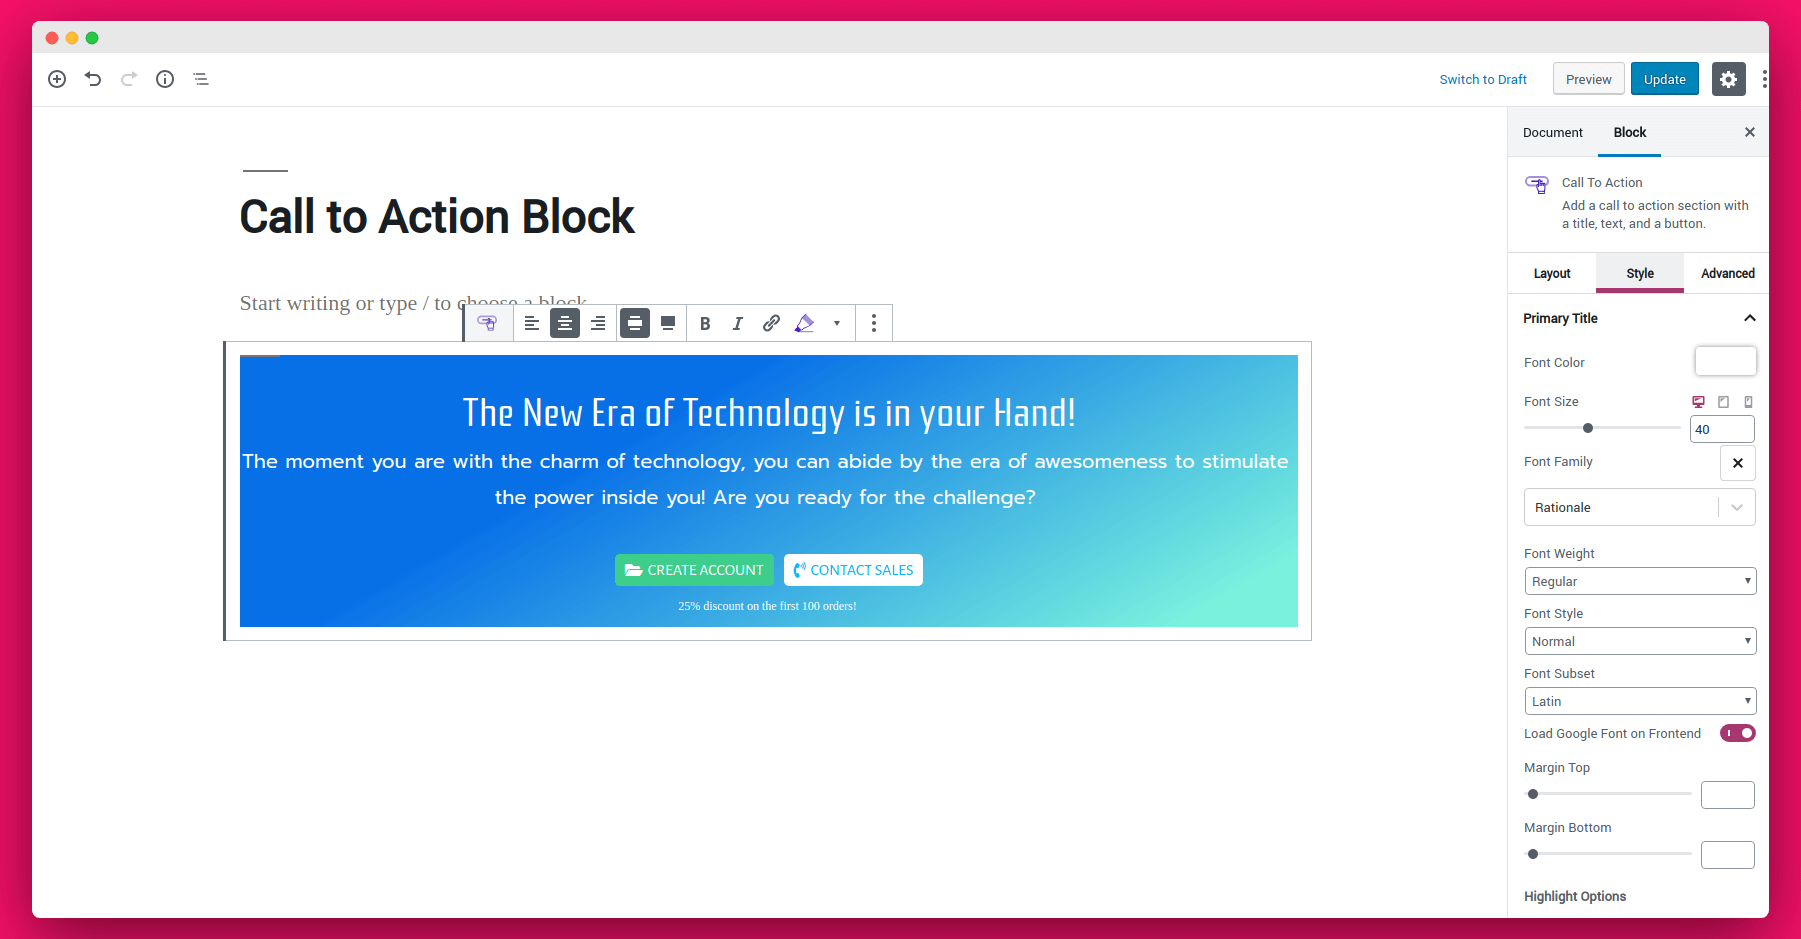 Demo landing page with Enhanced blocks